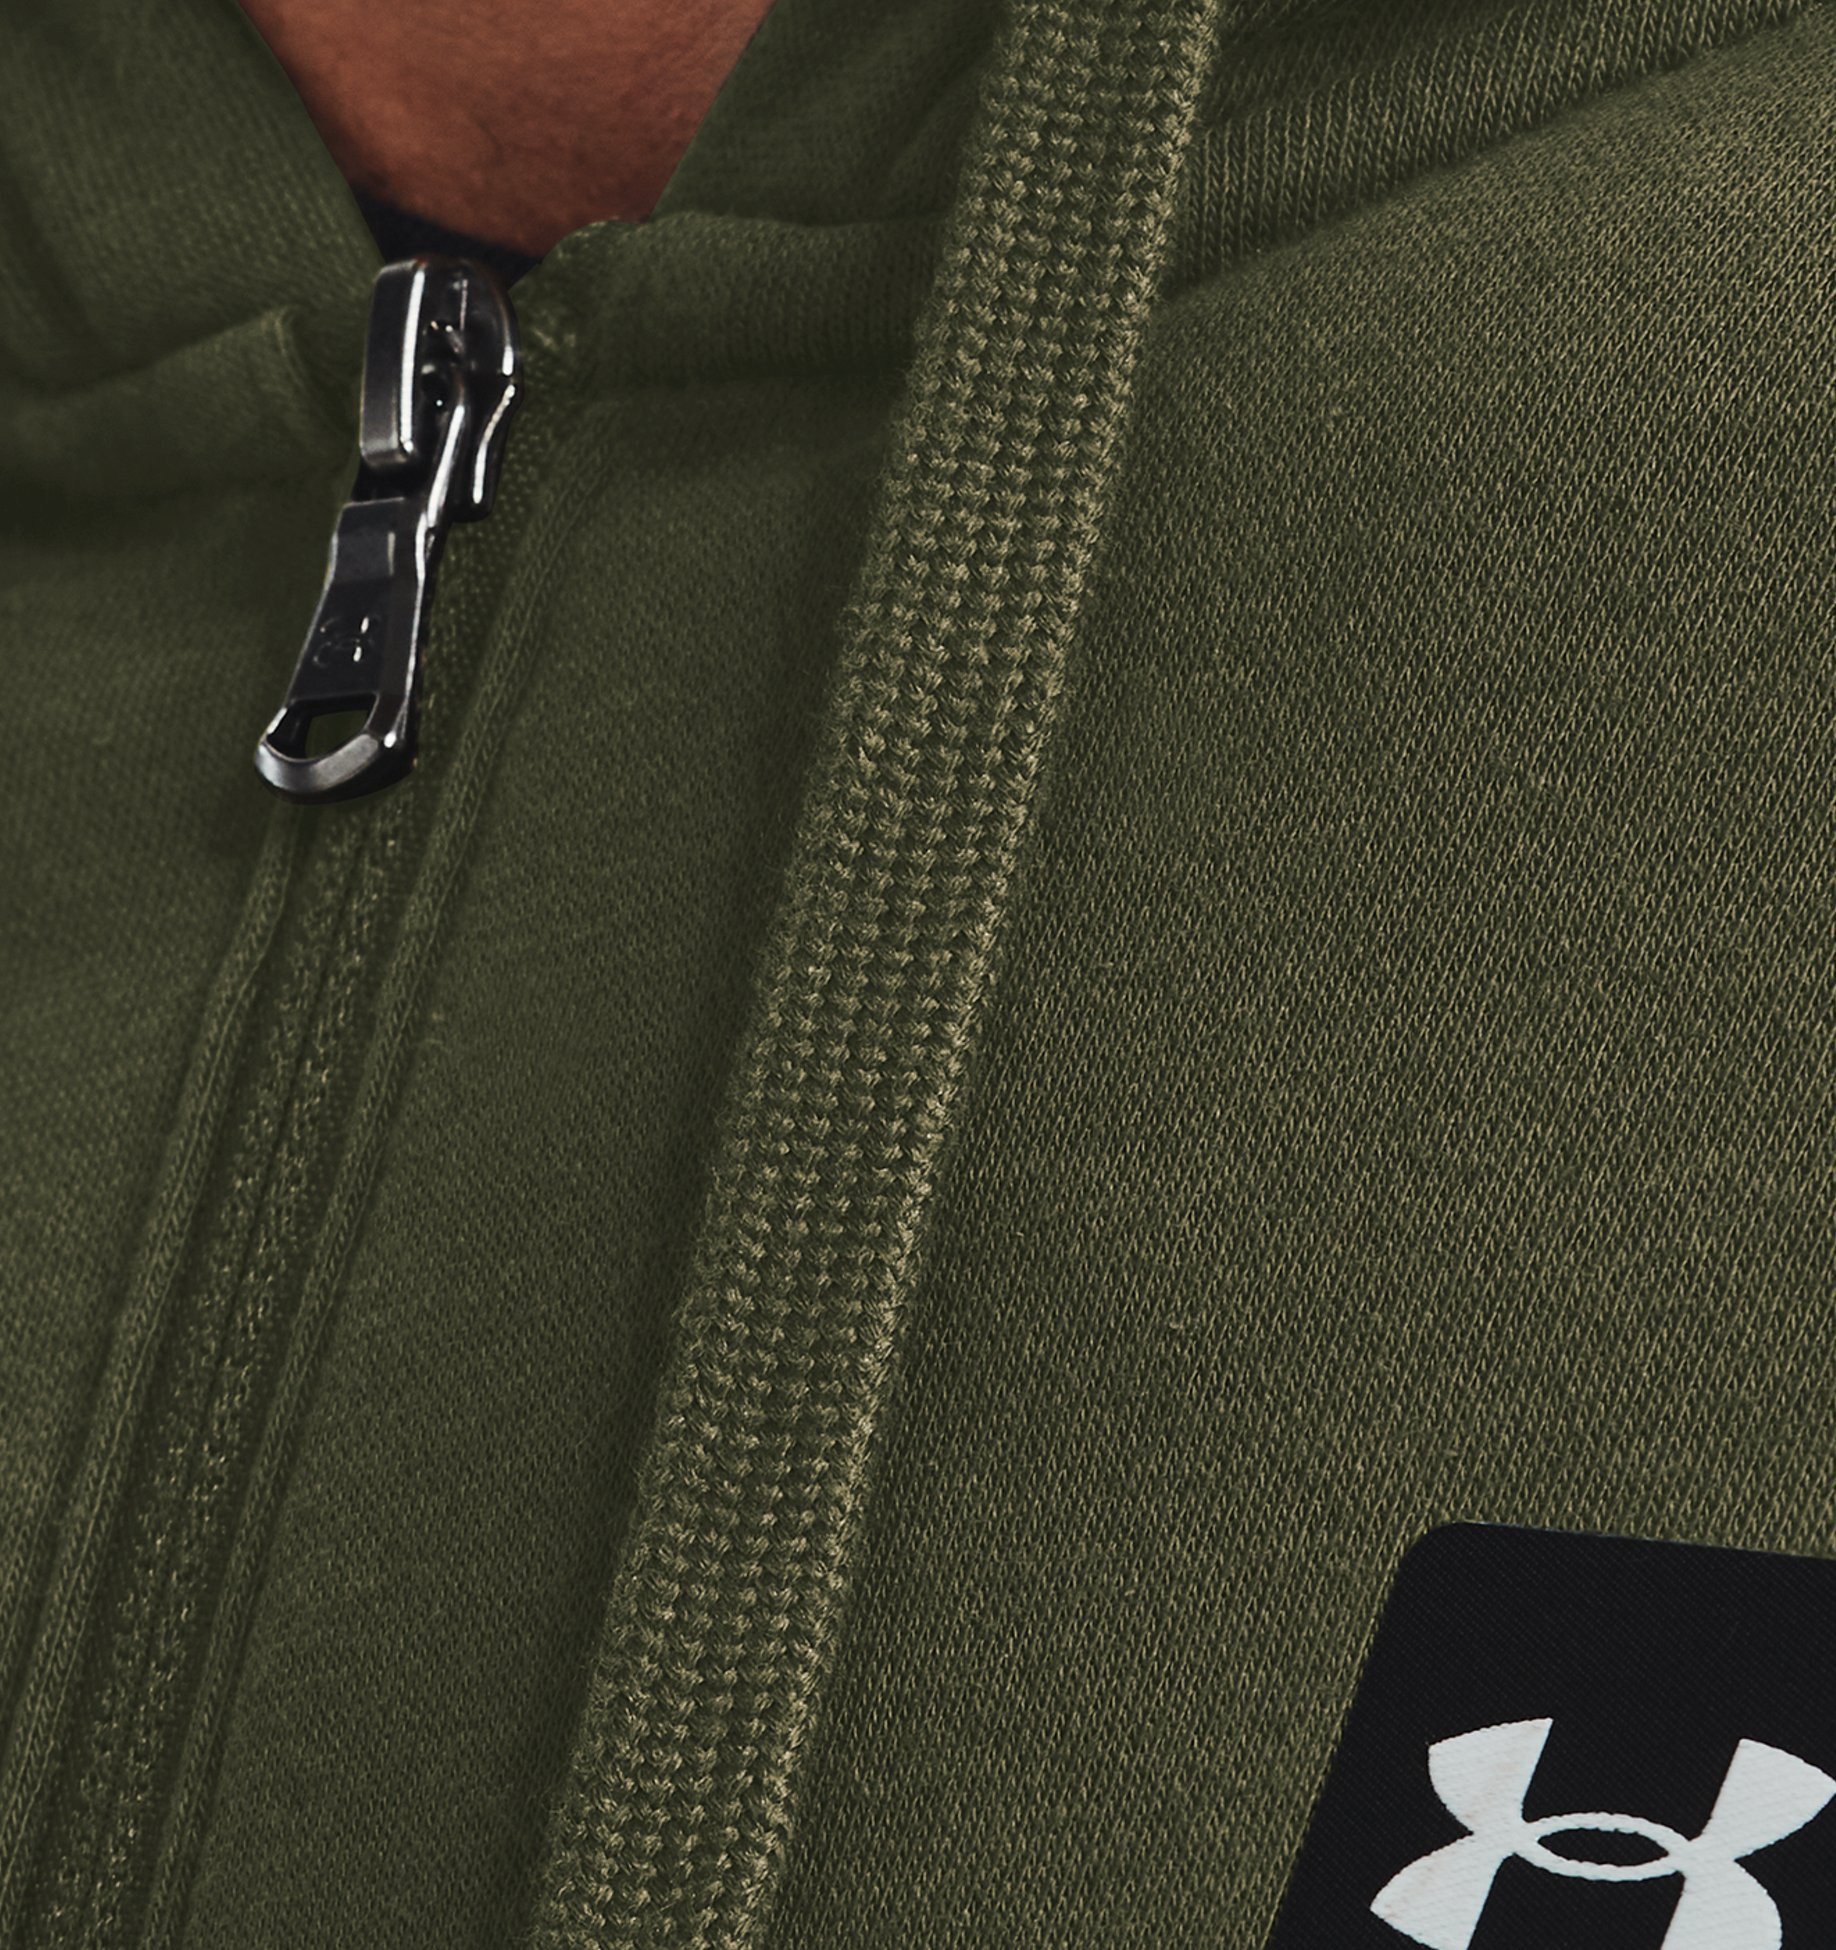 Casaco under armour rival fleece logo hoodie cinza feminino :: Amil Esportes